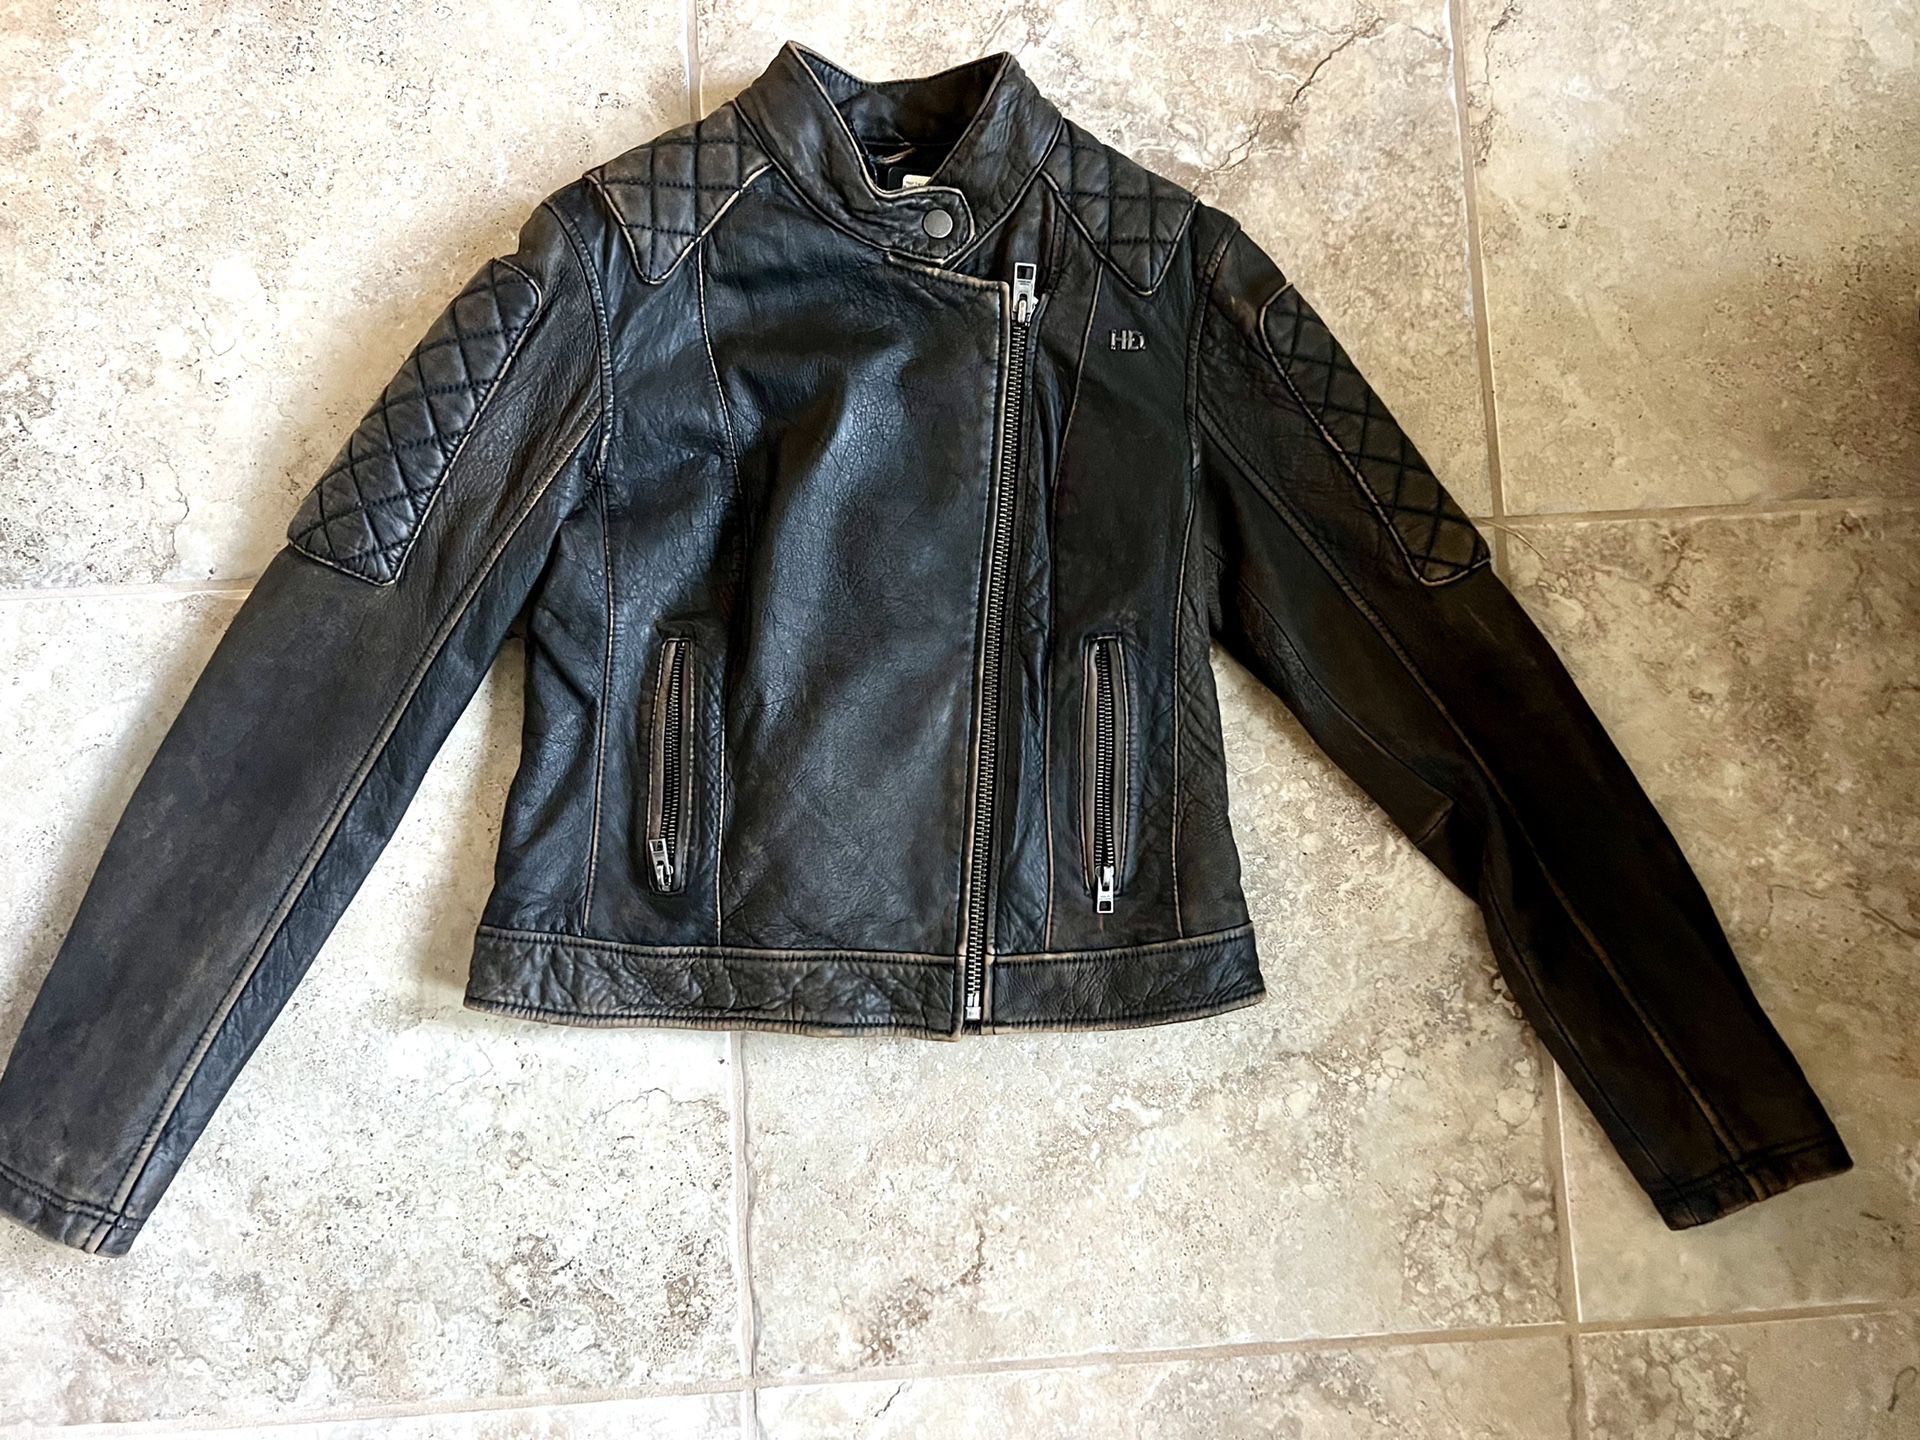 Lady’s Authentic Leather Harley Davidson Jacket